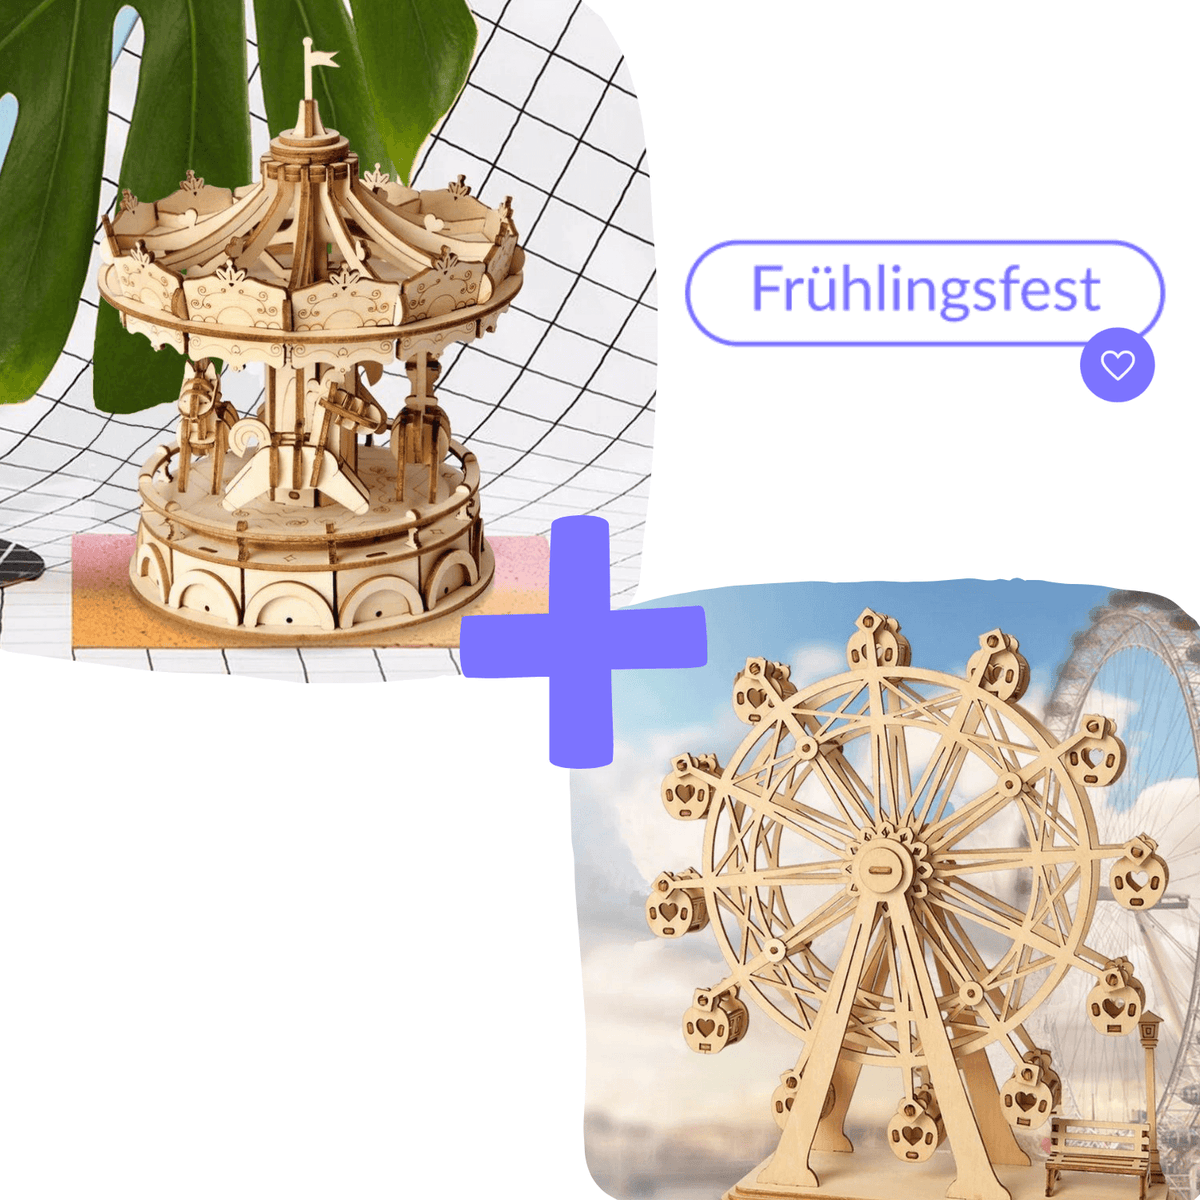 Spring festival | Spring | Festival | Ferris wheel | Carousel | Market | Puzzle | Wooden puzzle | Bundle